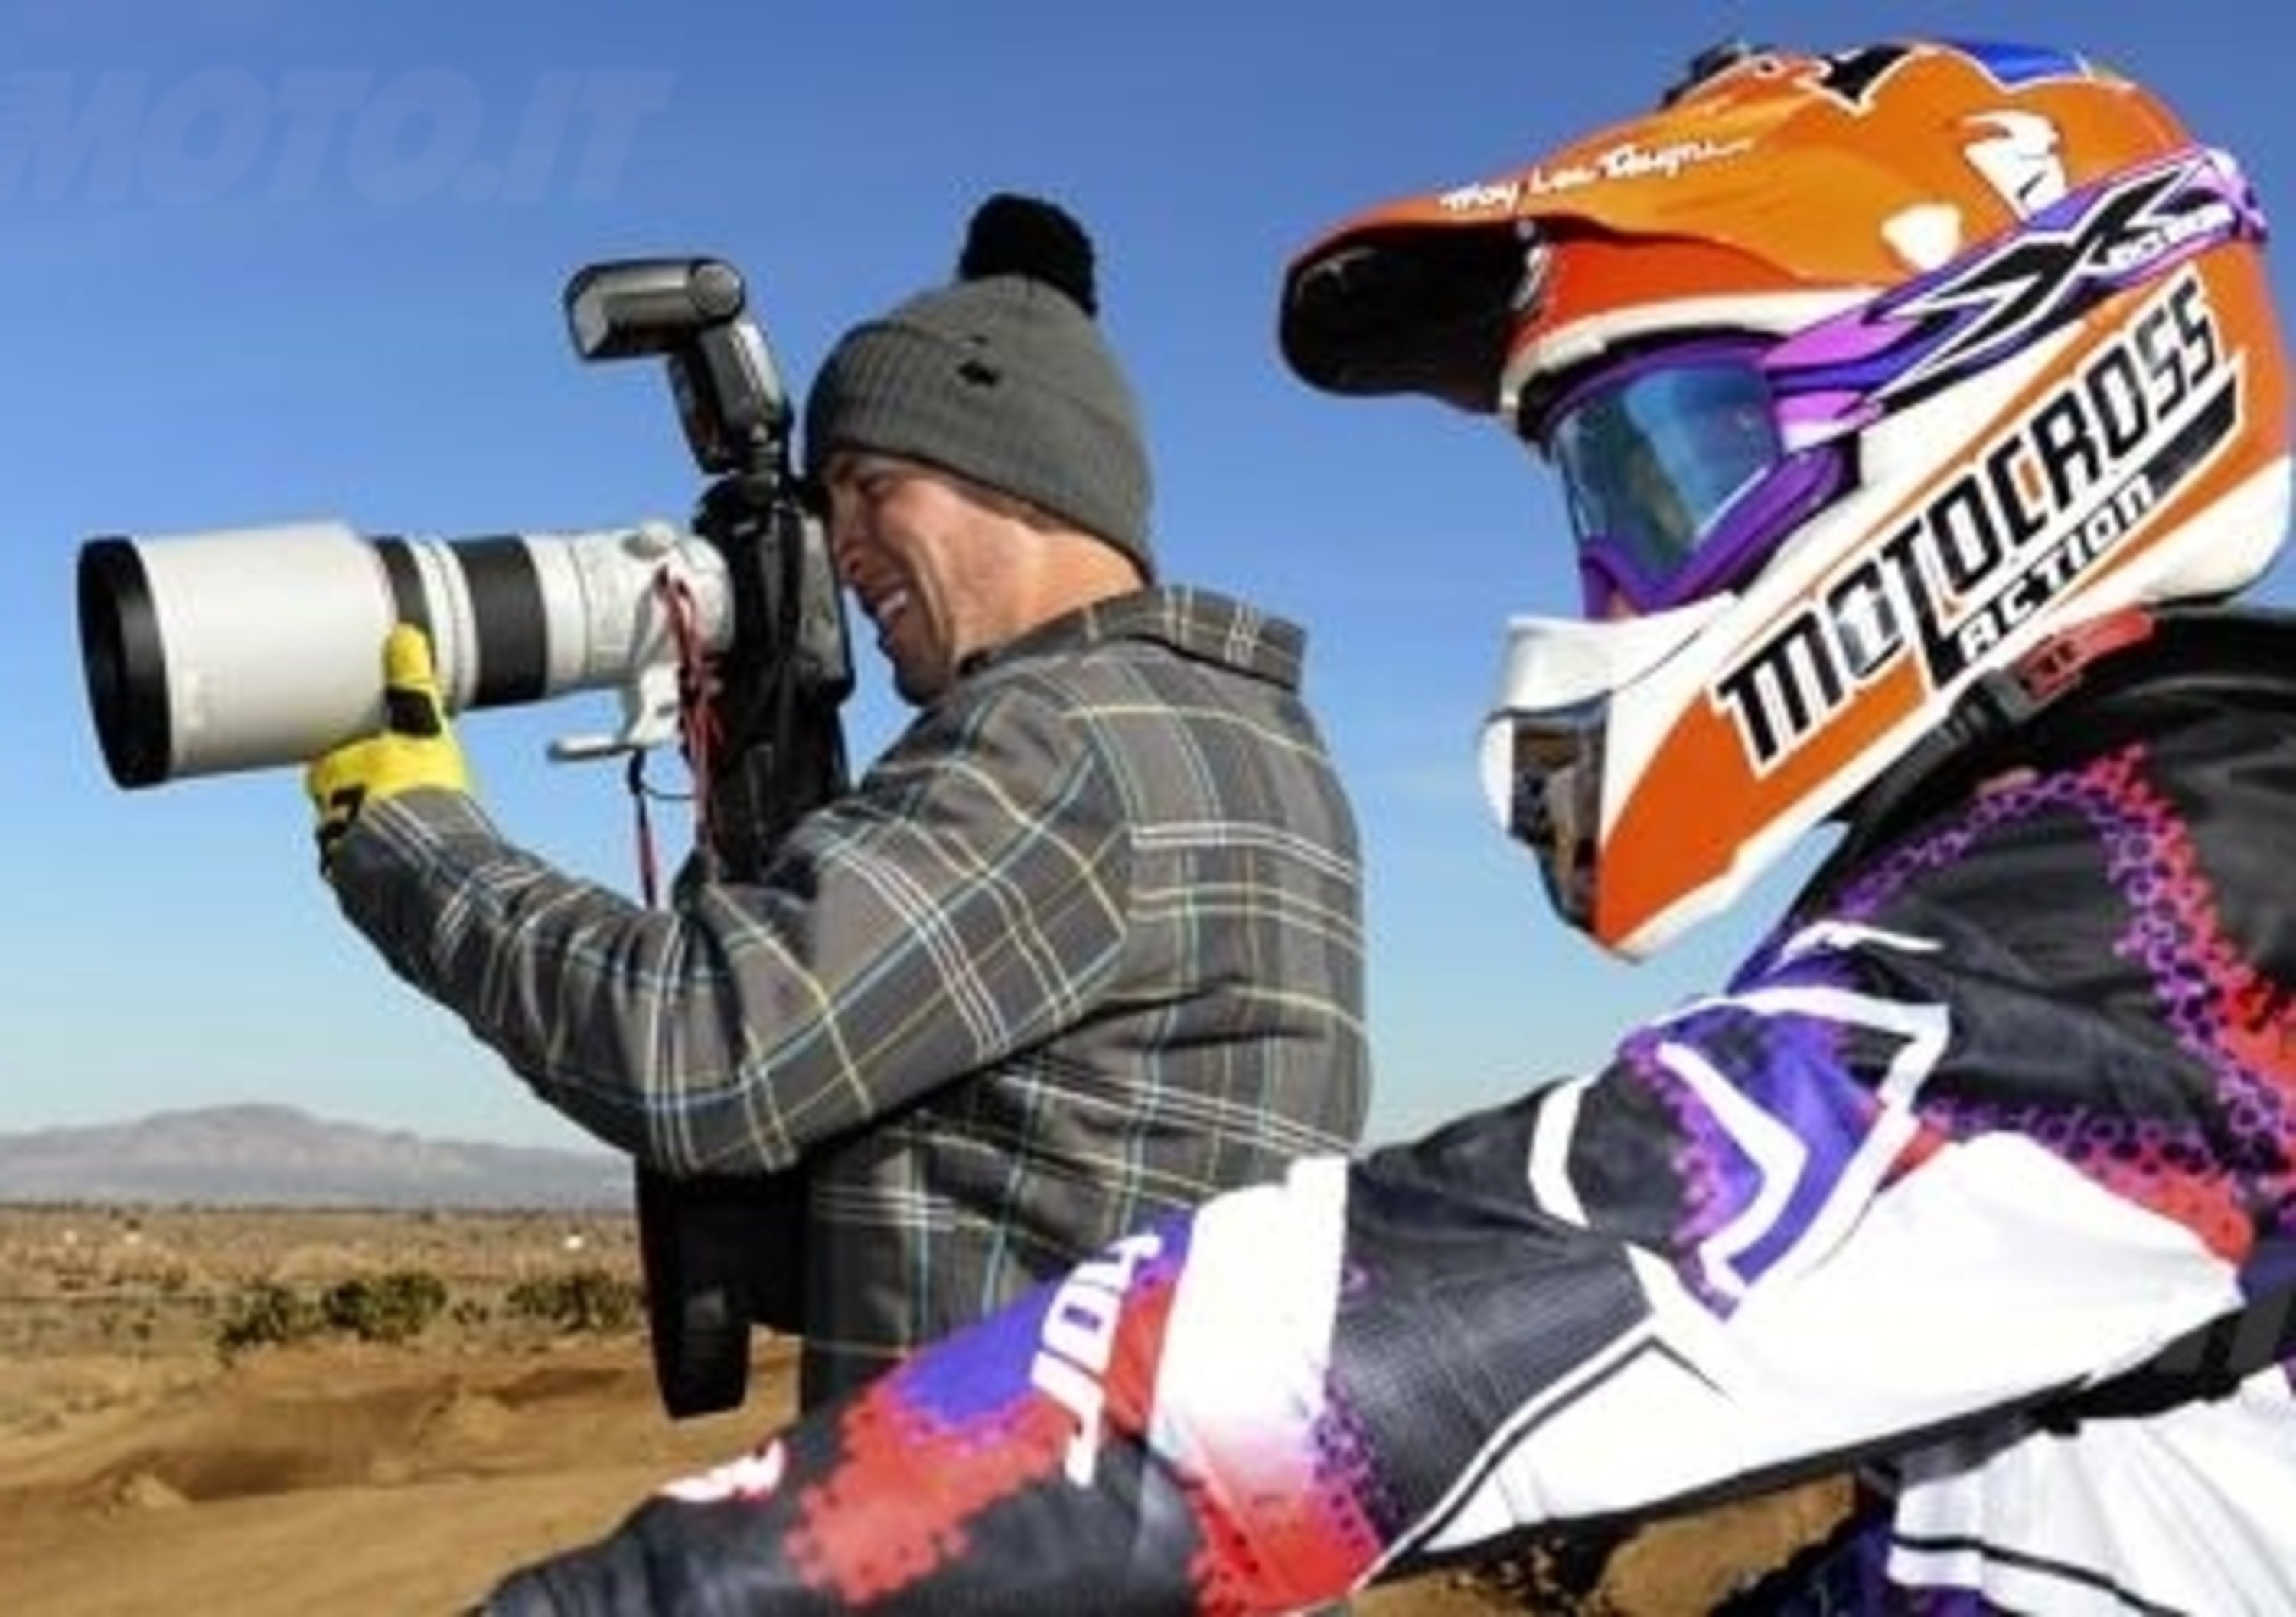 Intervista a John Basher, photoreporter Motocross negli USA